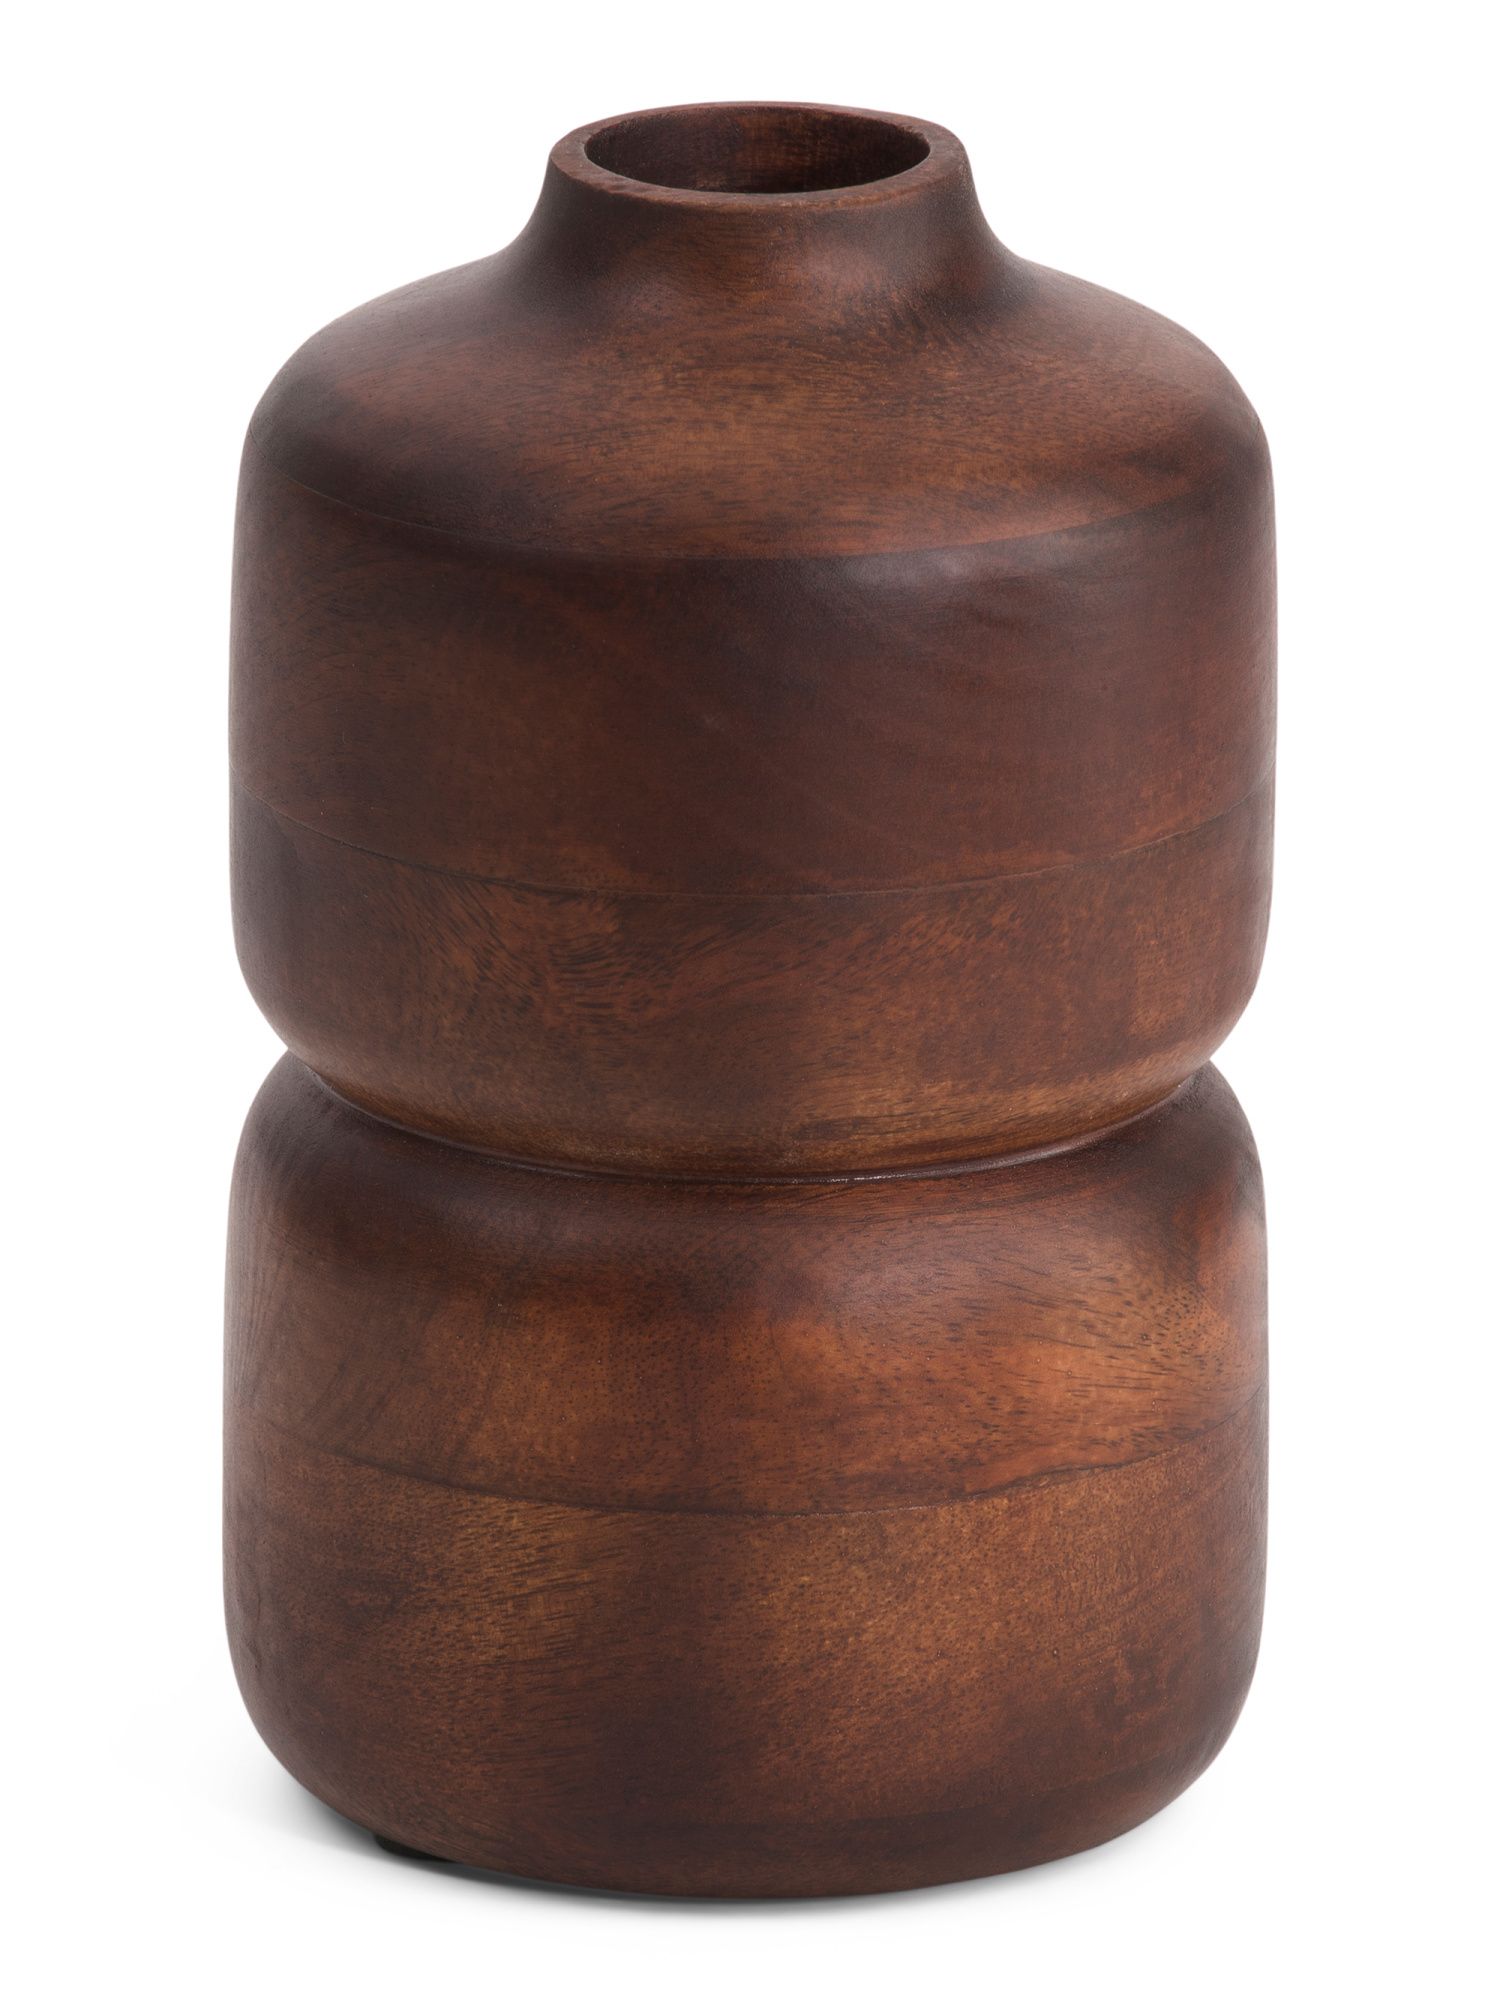 Mango Wood Vase | TJ Maxx